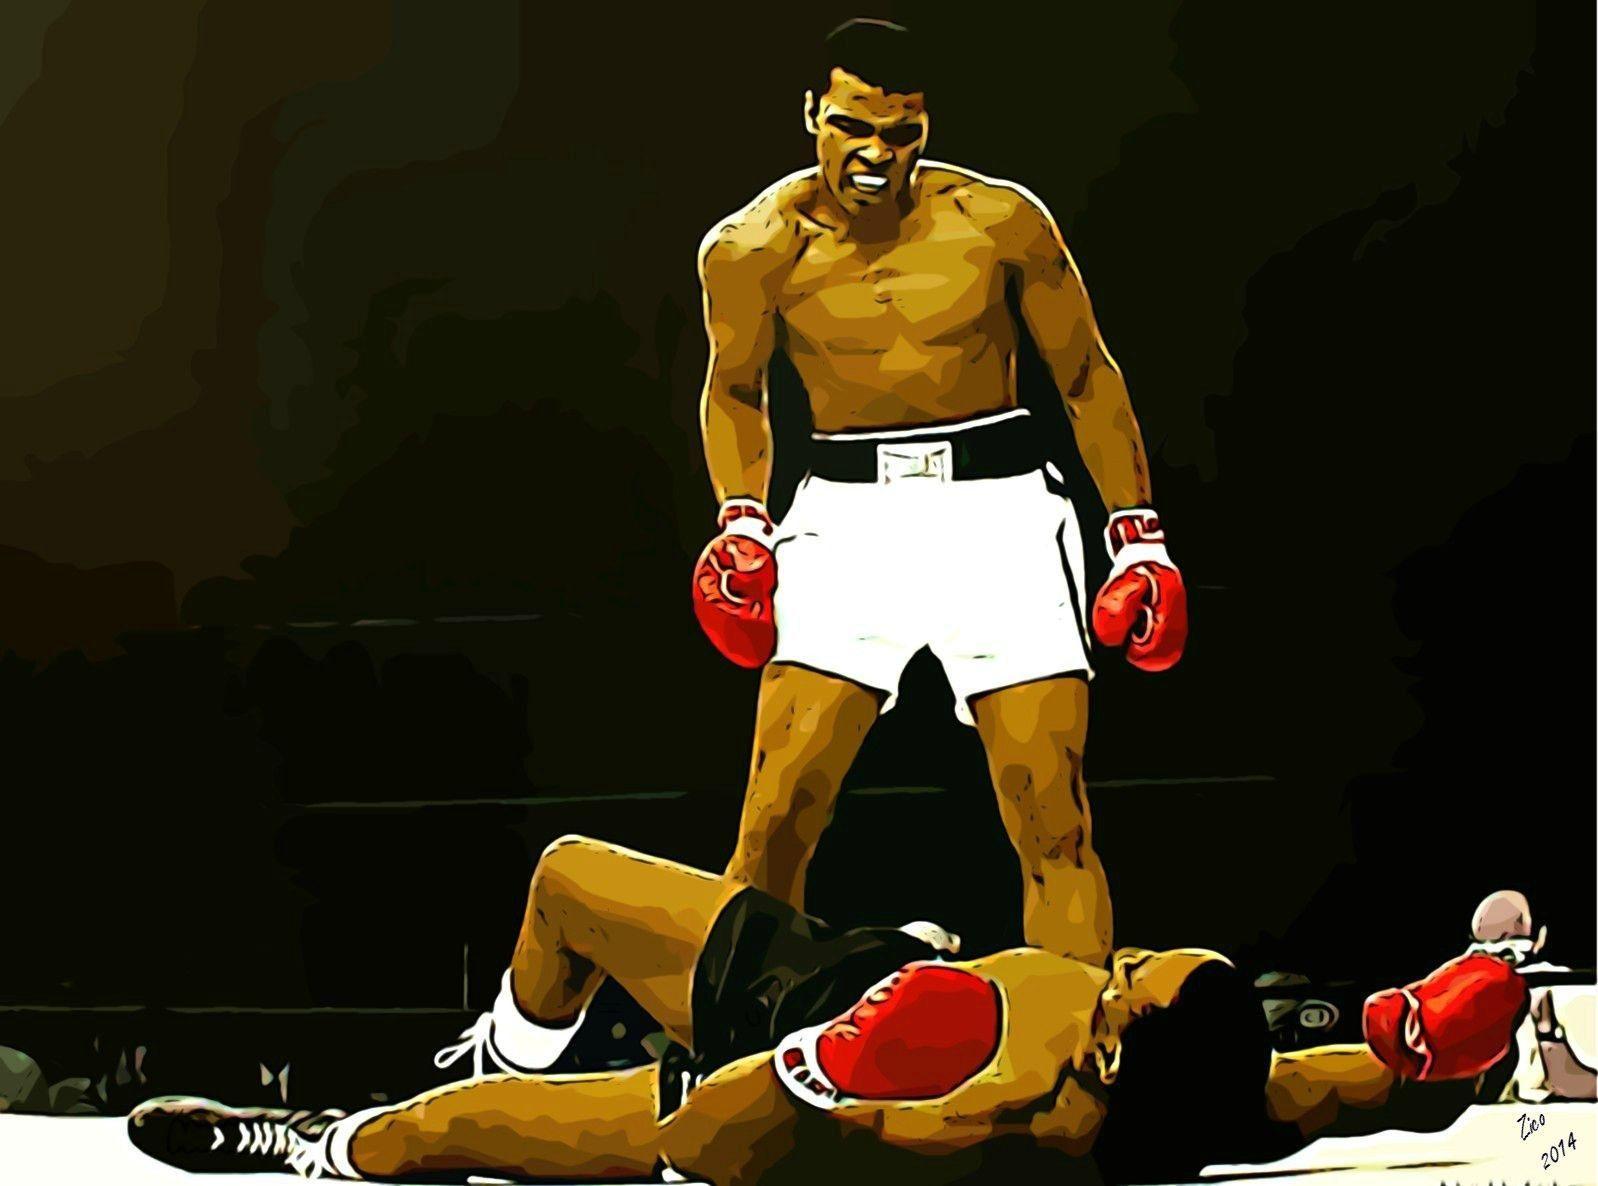 digital Art, Boxing, Sports, Men, Heroes, Muhammad Ali, Celebrity